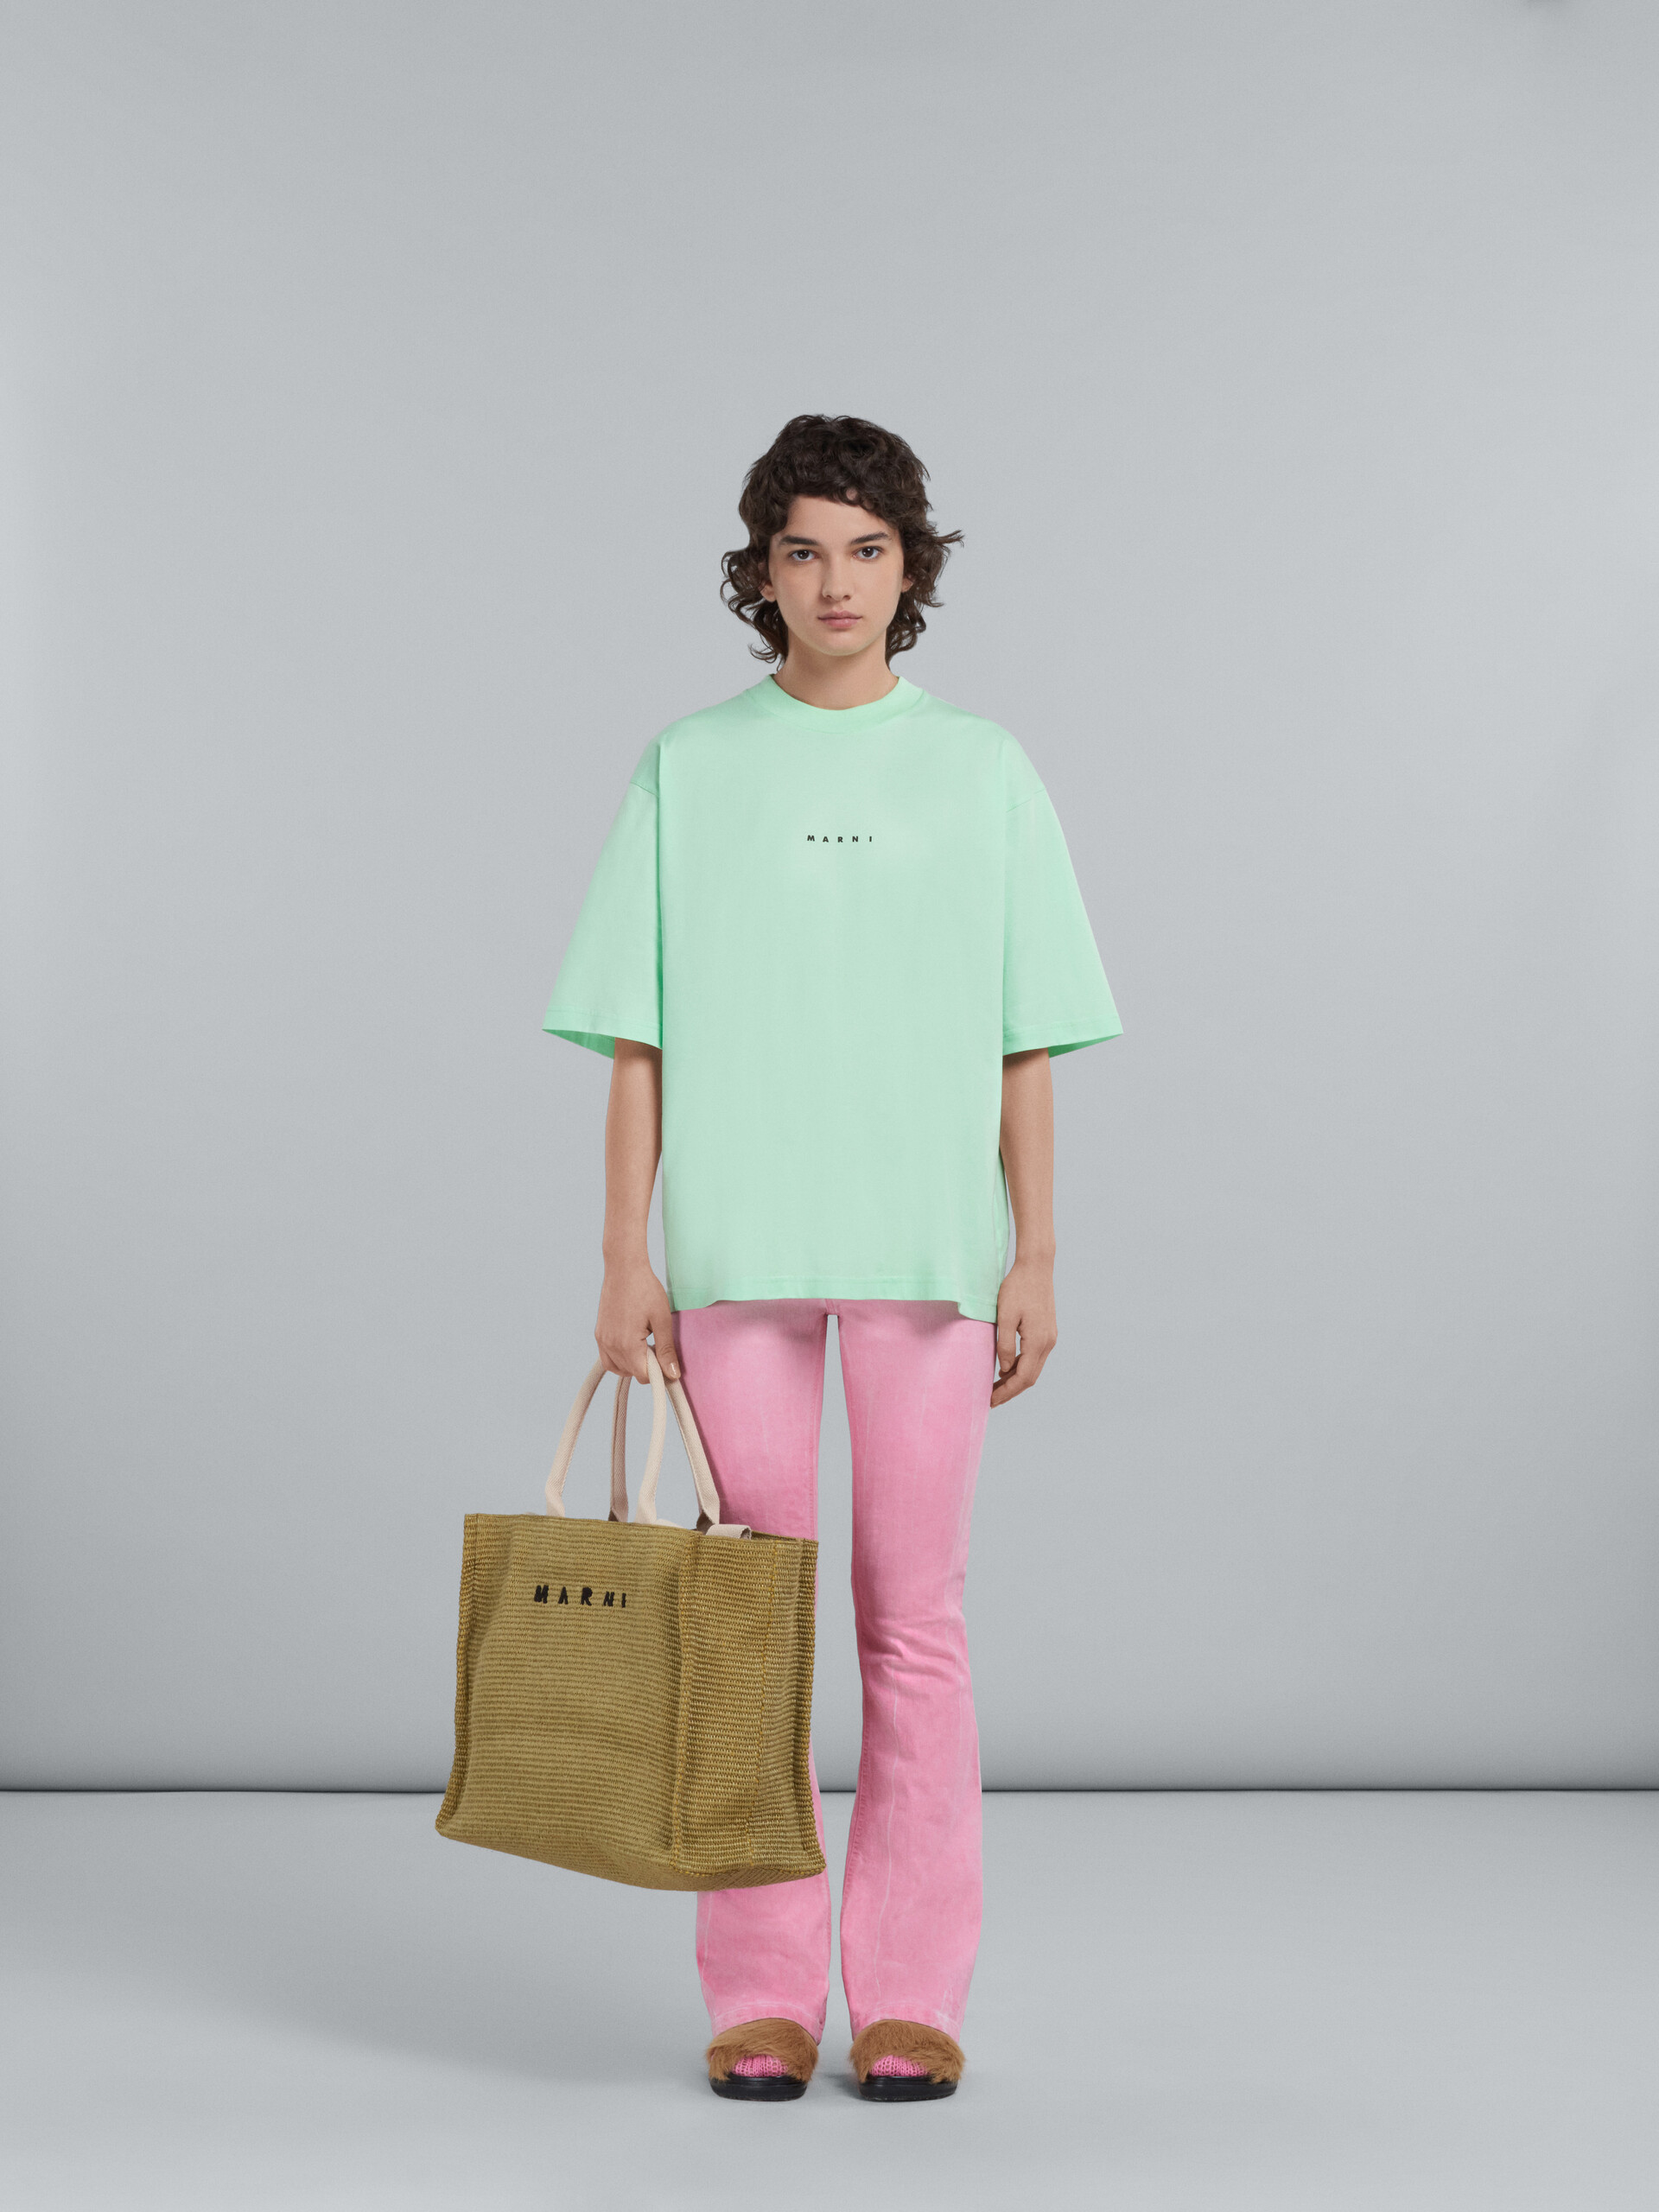 Tote Bag Grande in rafia verde - Borse shopping - Image 2